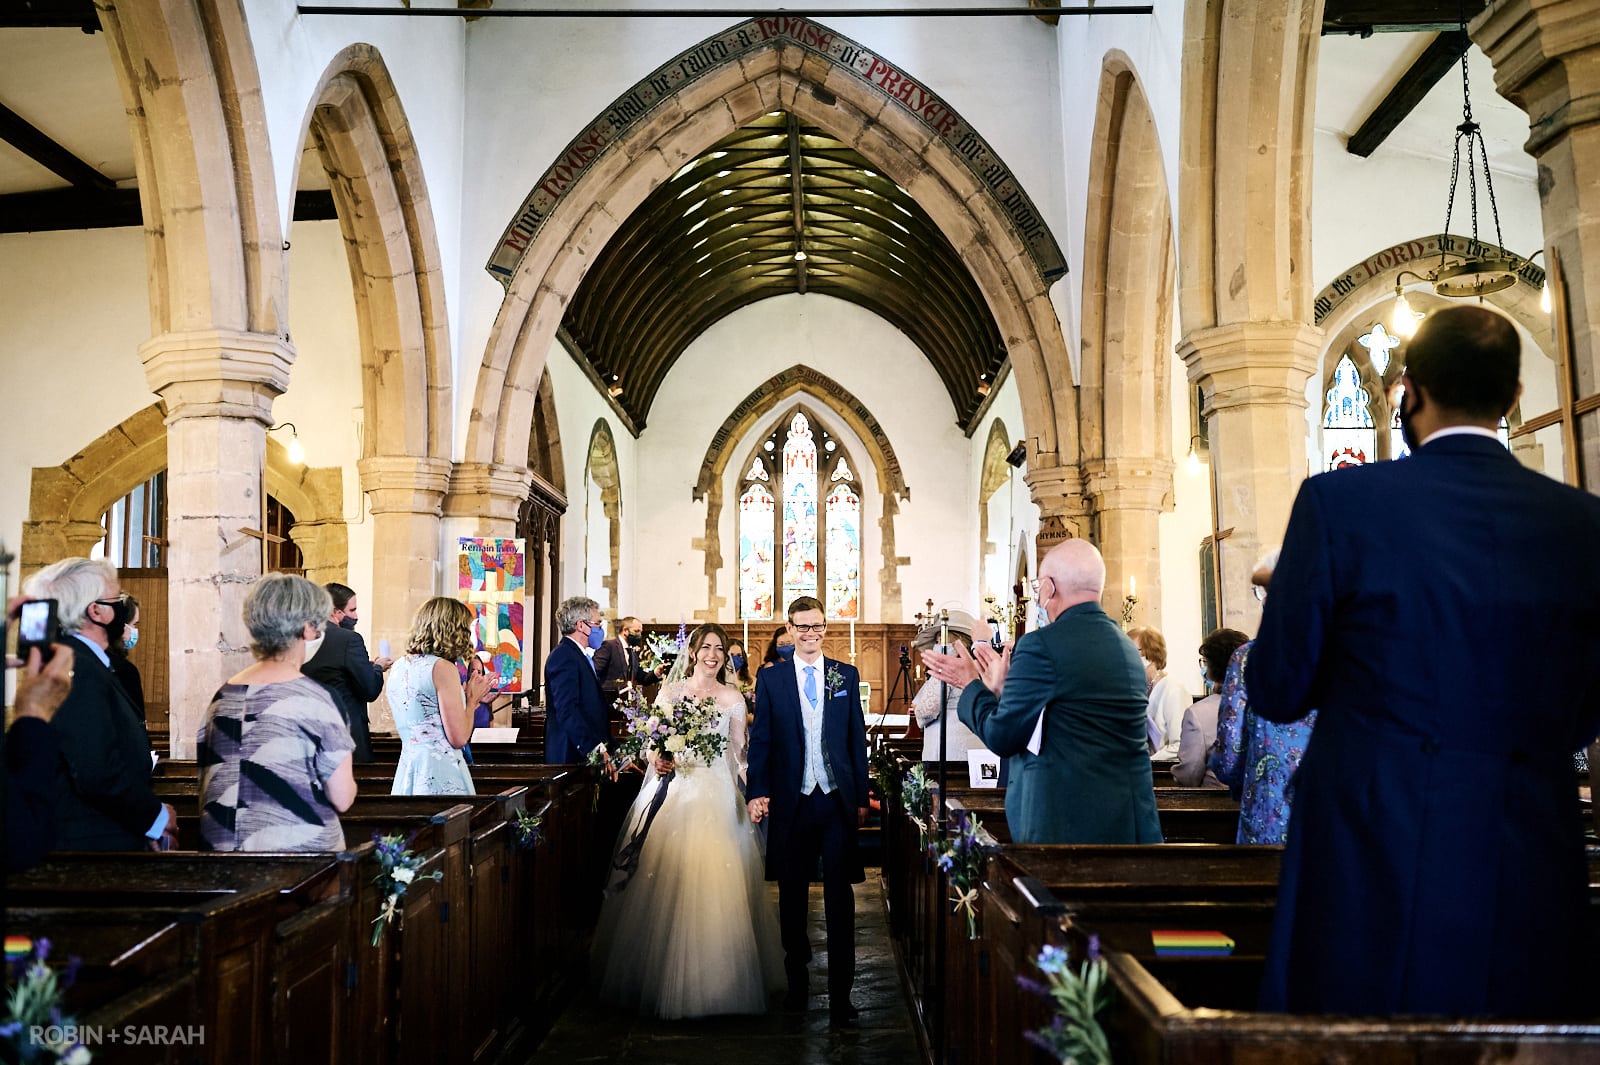 Bride and groom walk down aisle after wedding ceremony at St Faiths church Kilsby